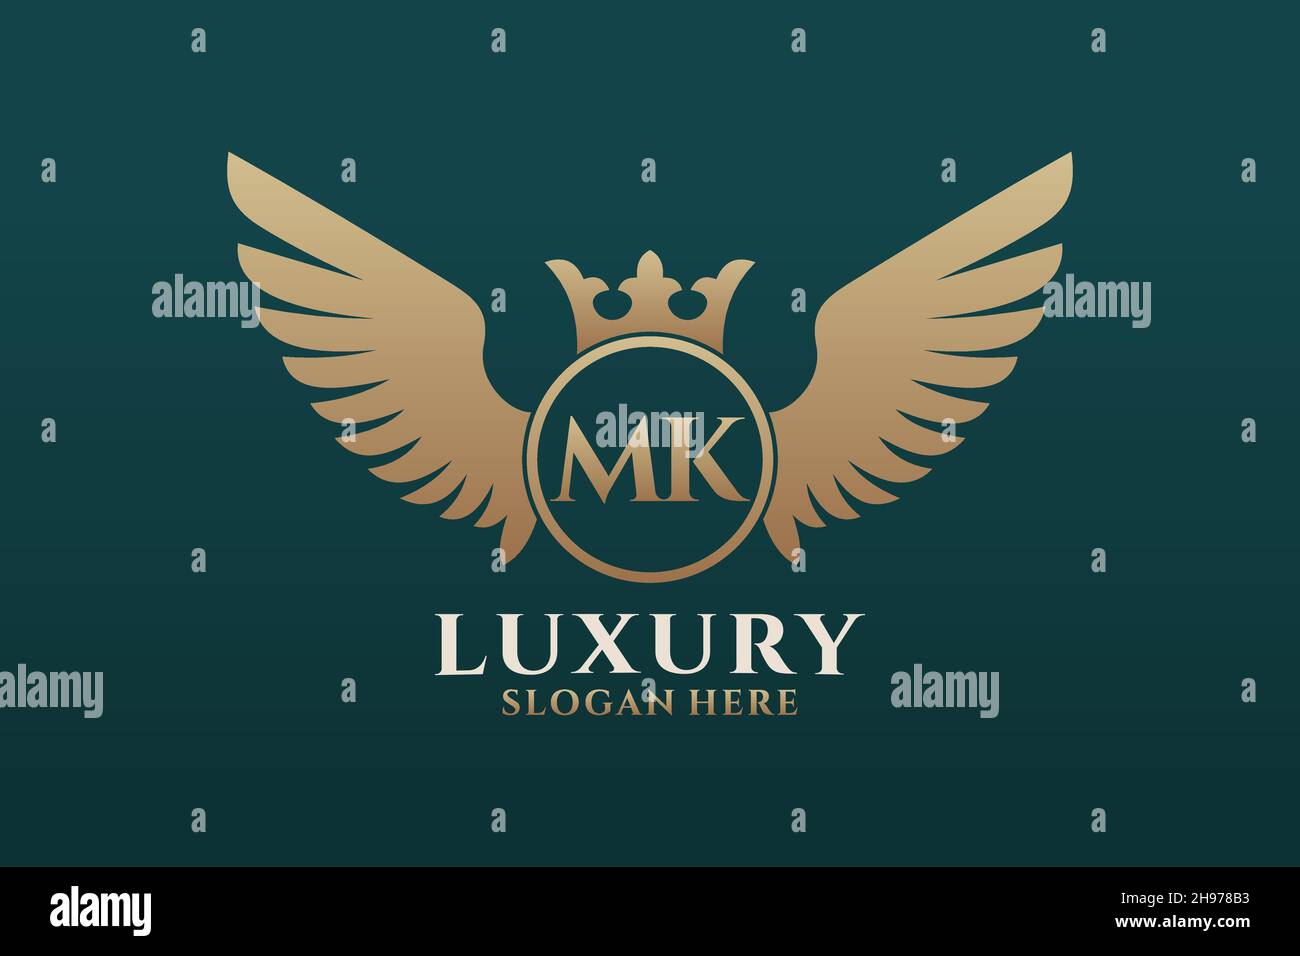 Vecteur Stock K&M Initial logo. Ornament gold